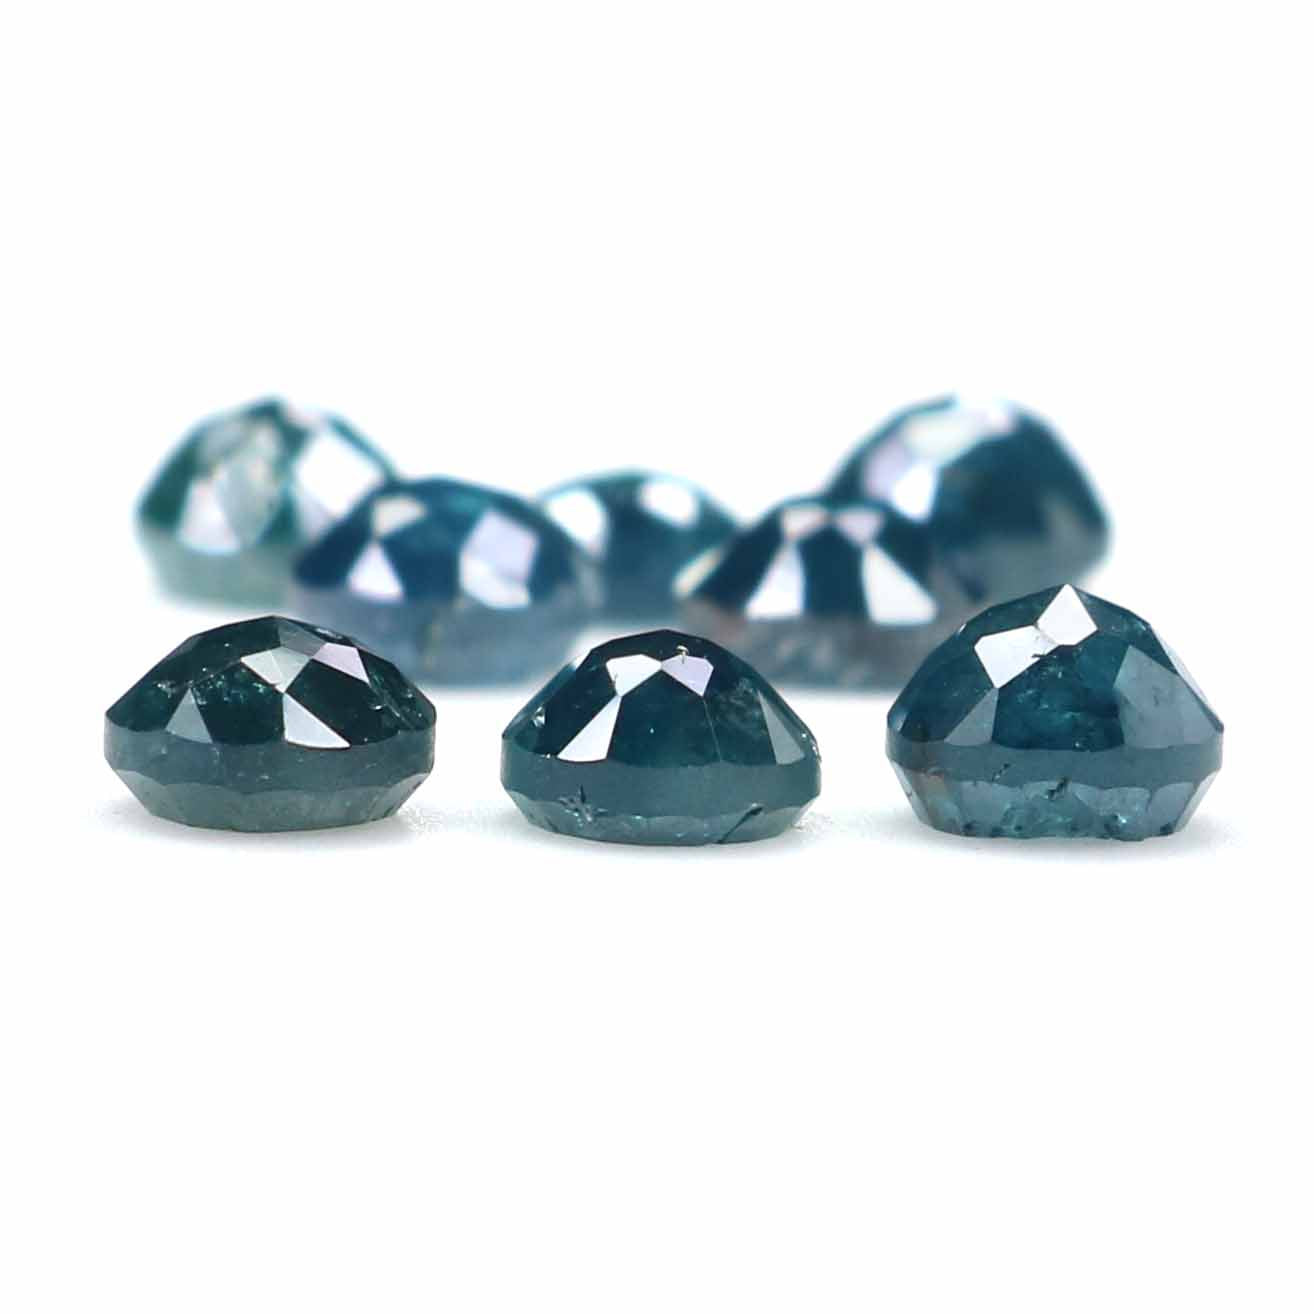 Natural Loose Rose Cut Blue Color Diamond 2.33 CT 3.65 MM Round Rose Cut Shape Diamond KR2546